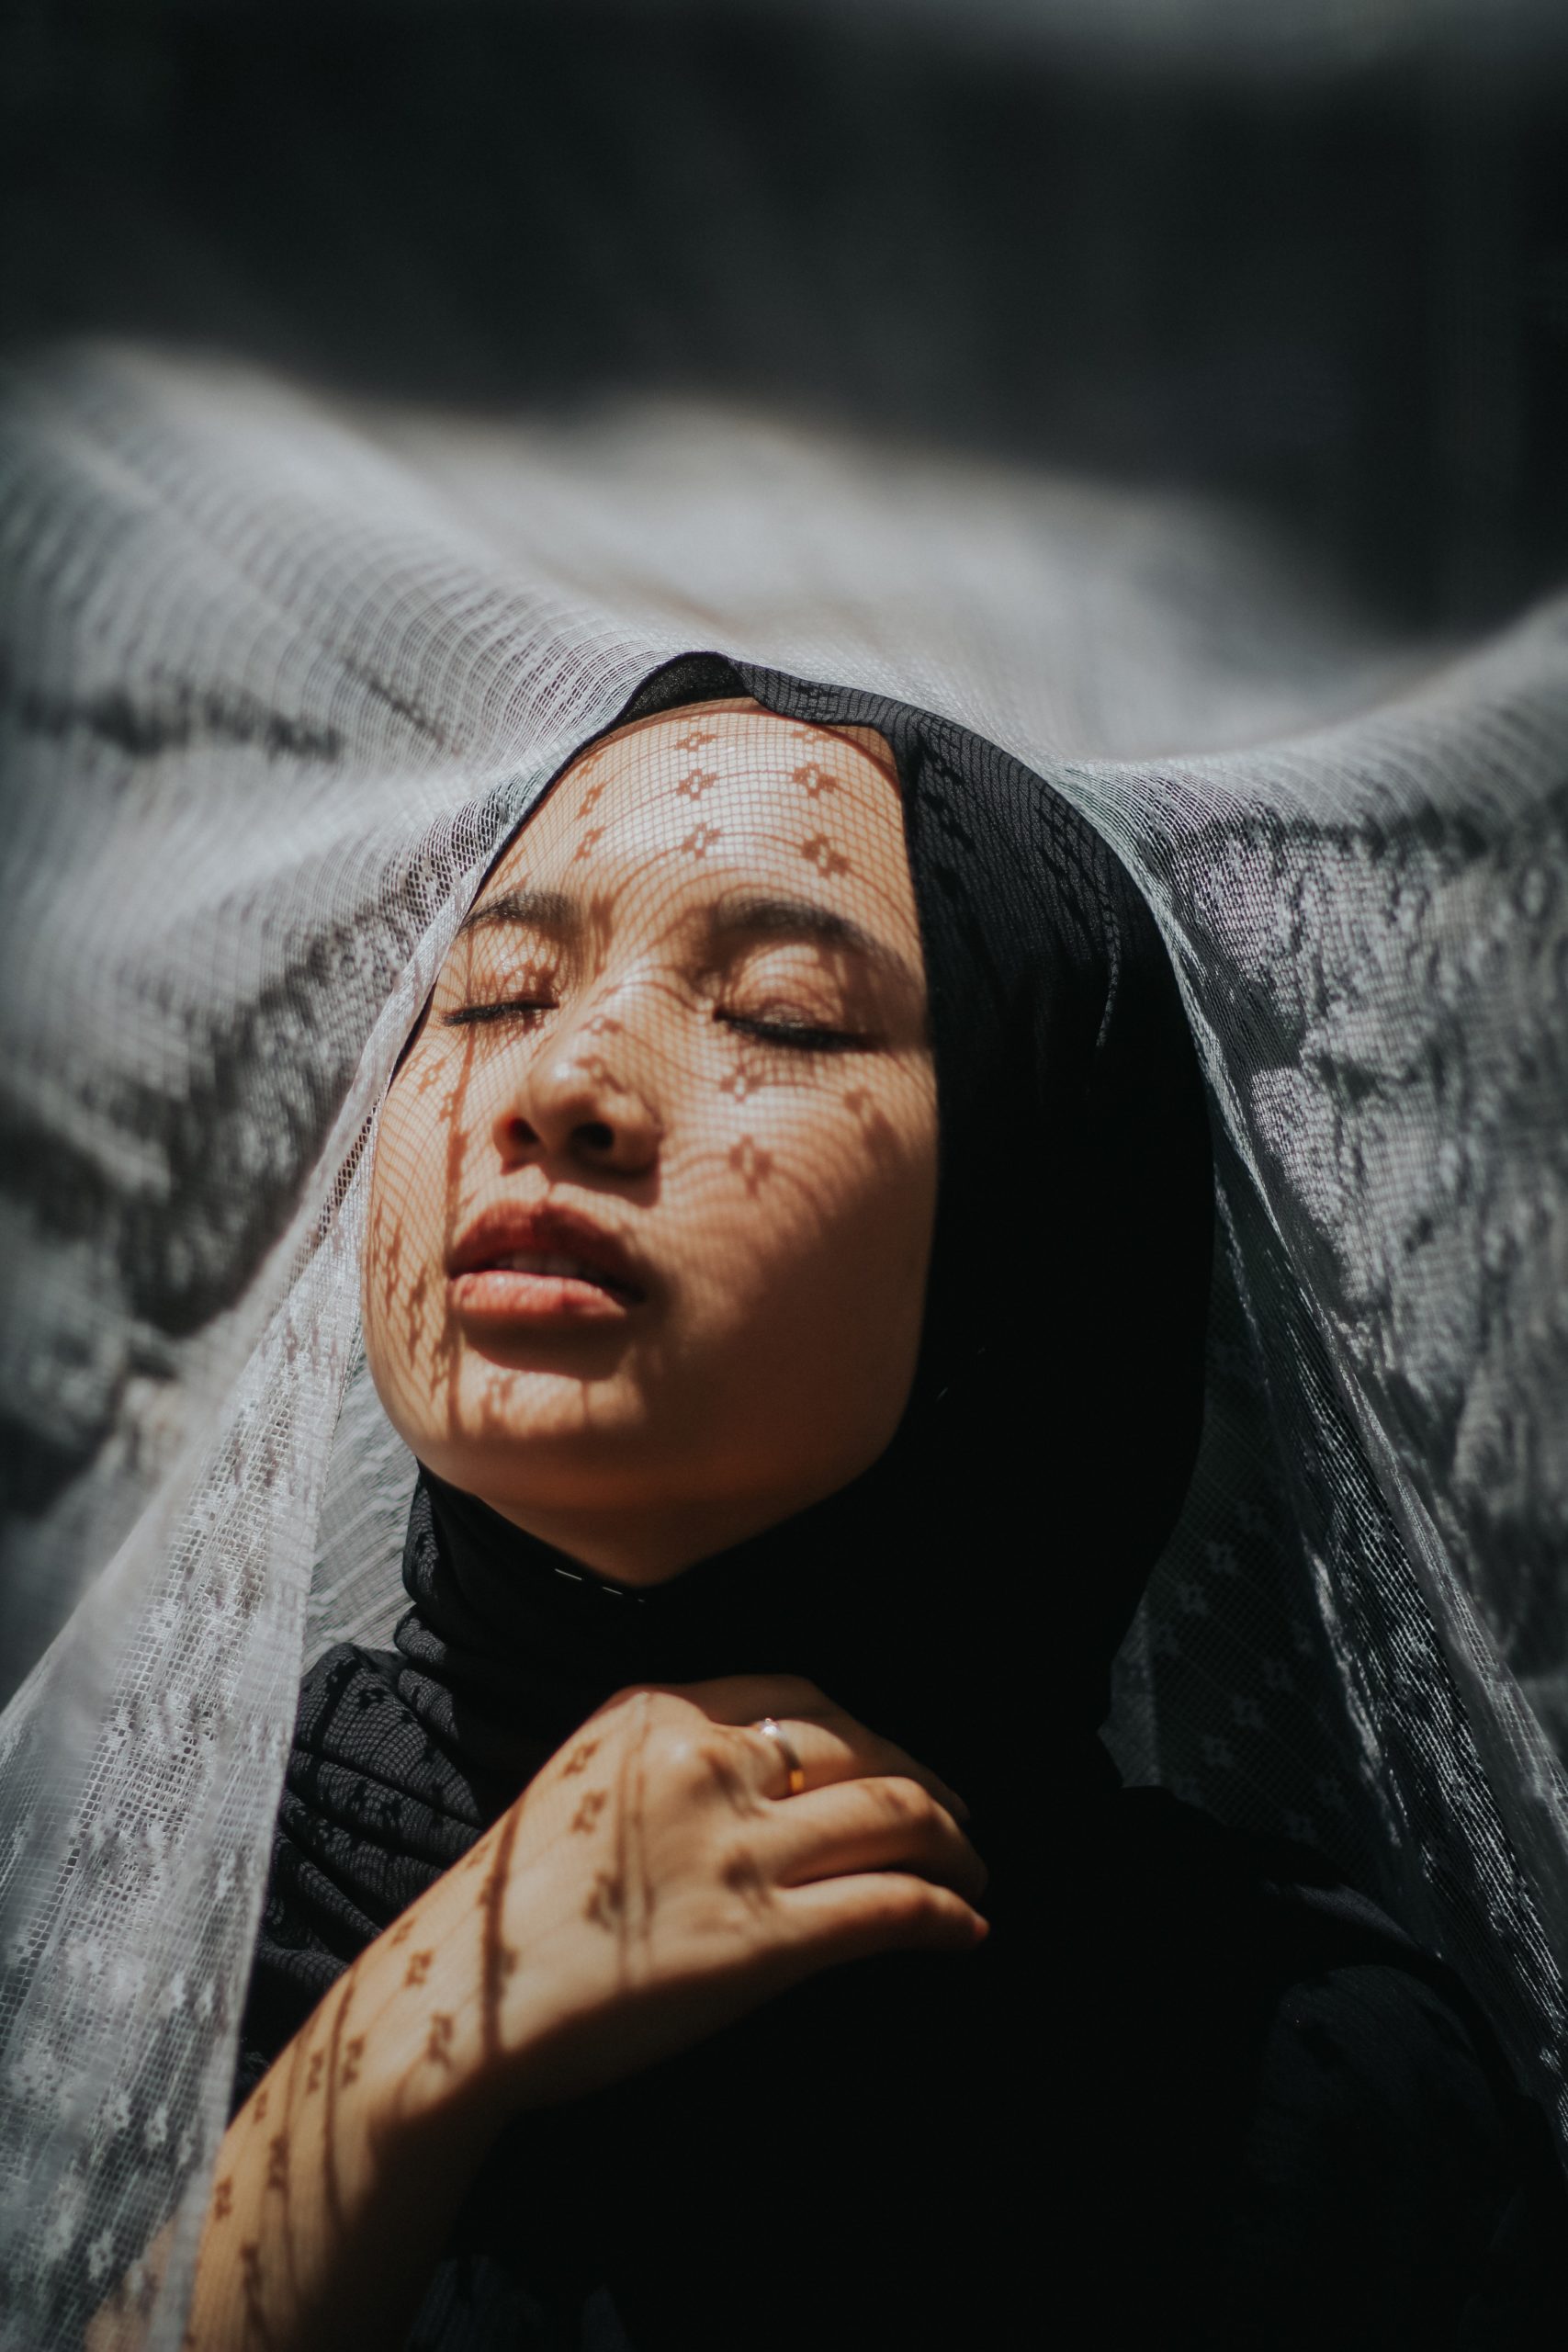 Woman Wearing Black Head Scarf in Grief Eyes closed as if in prayer